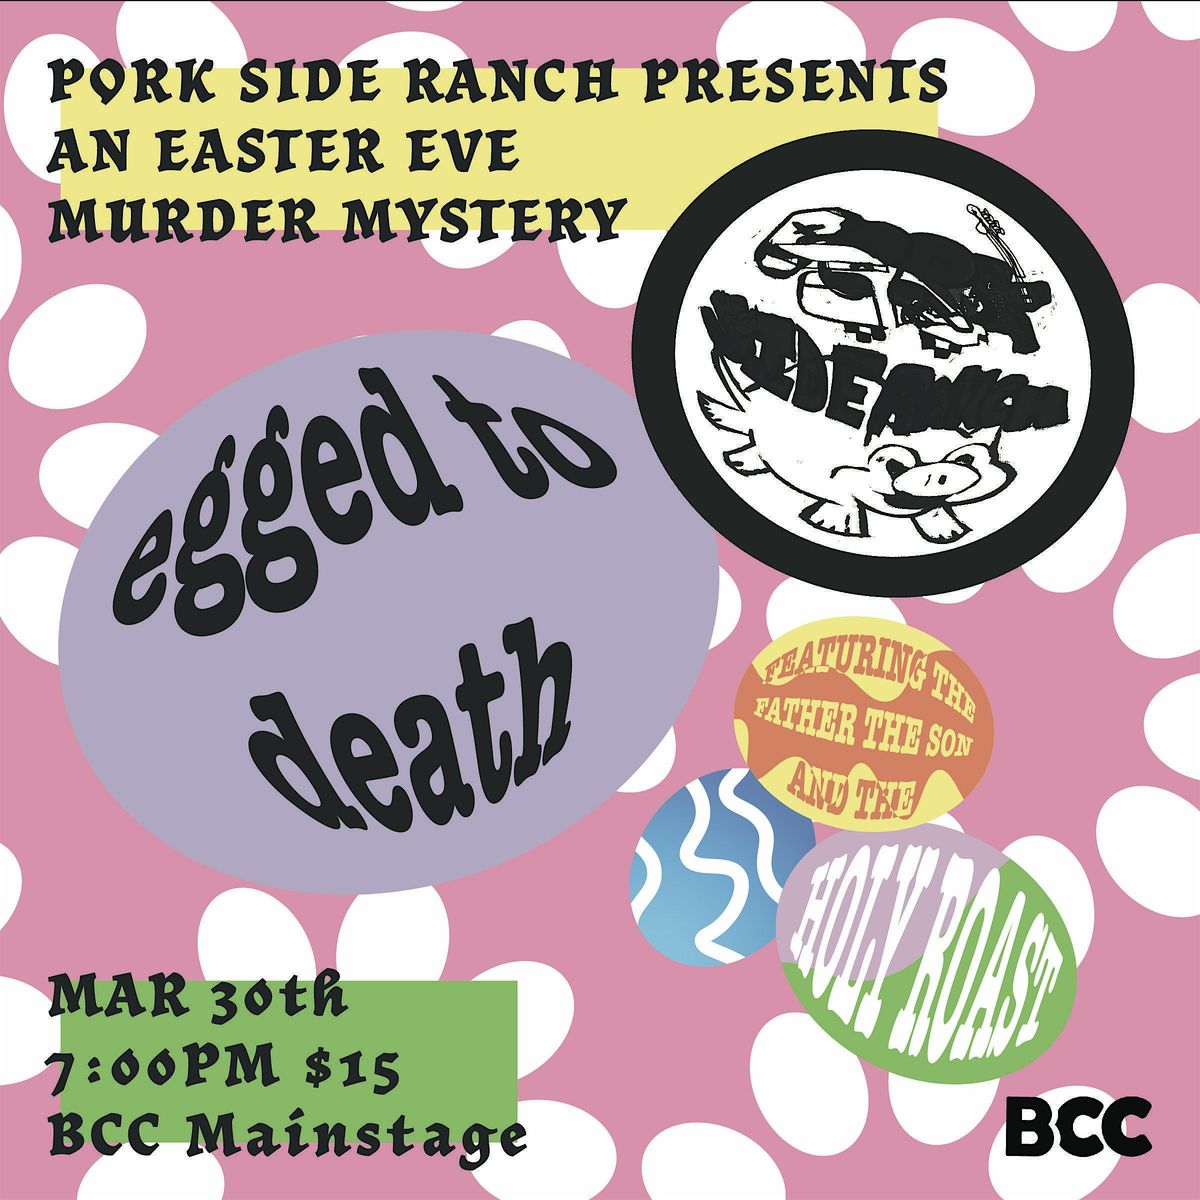 Pork Side Ranch presents: Egged To Death